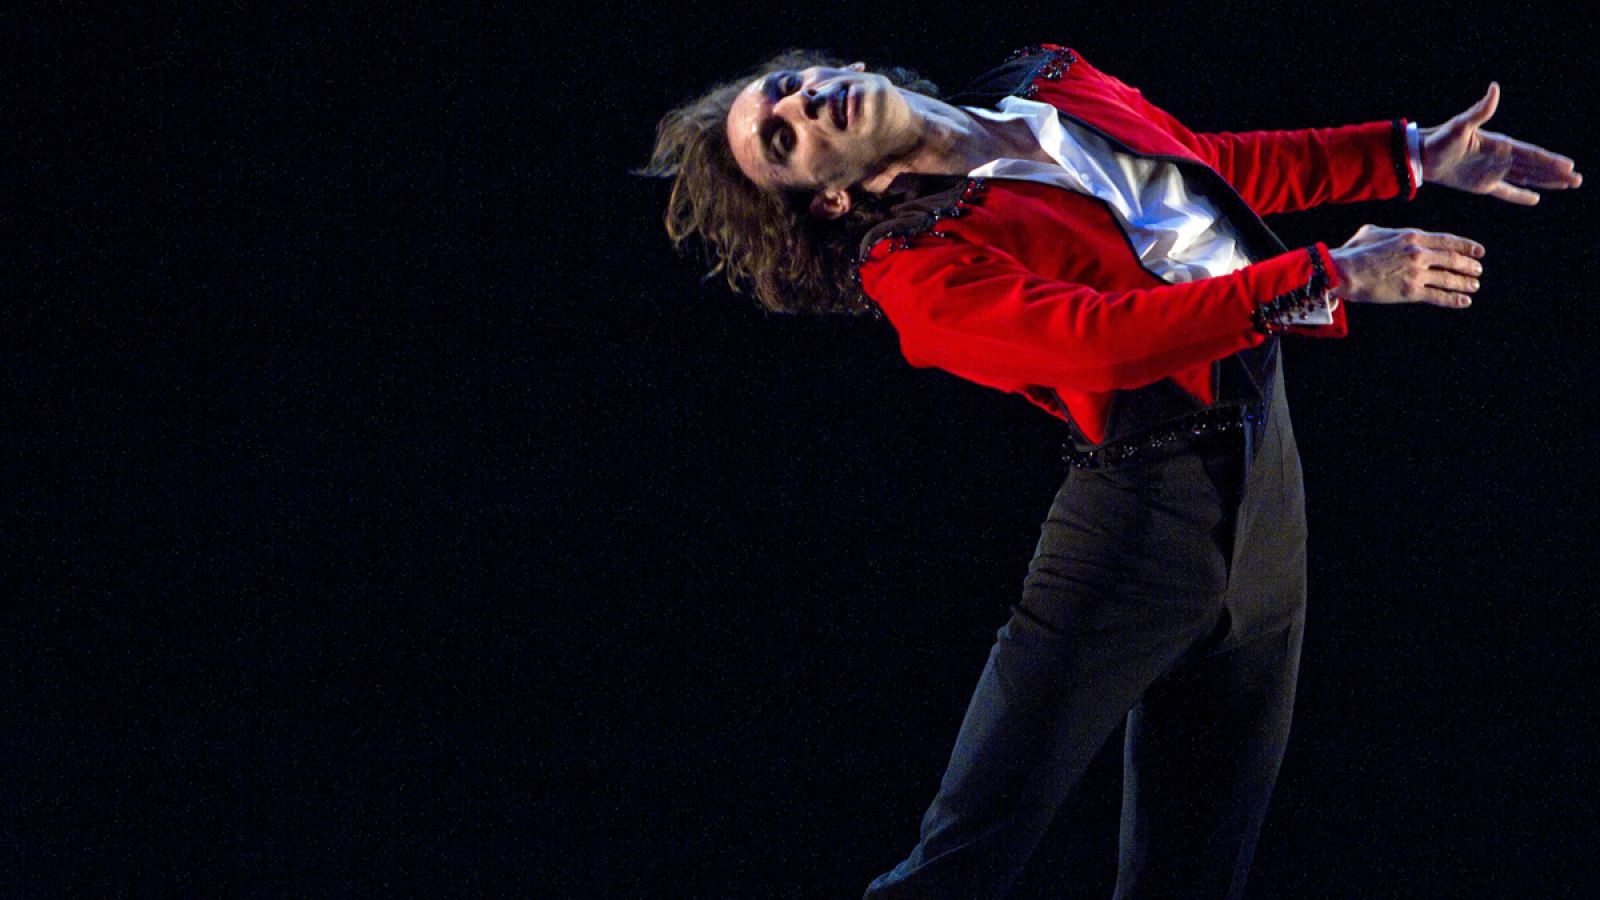 Imagen de 2012 del bailarín y coreógrafo sevillano Rubén Olmo